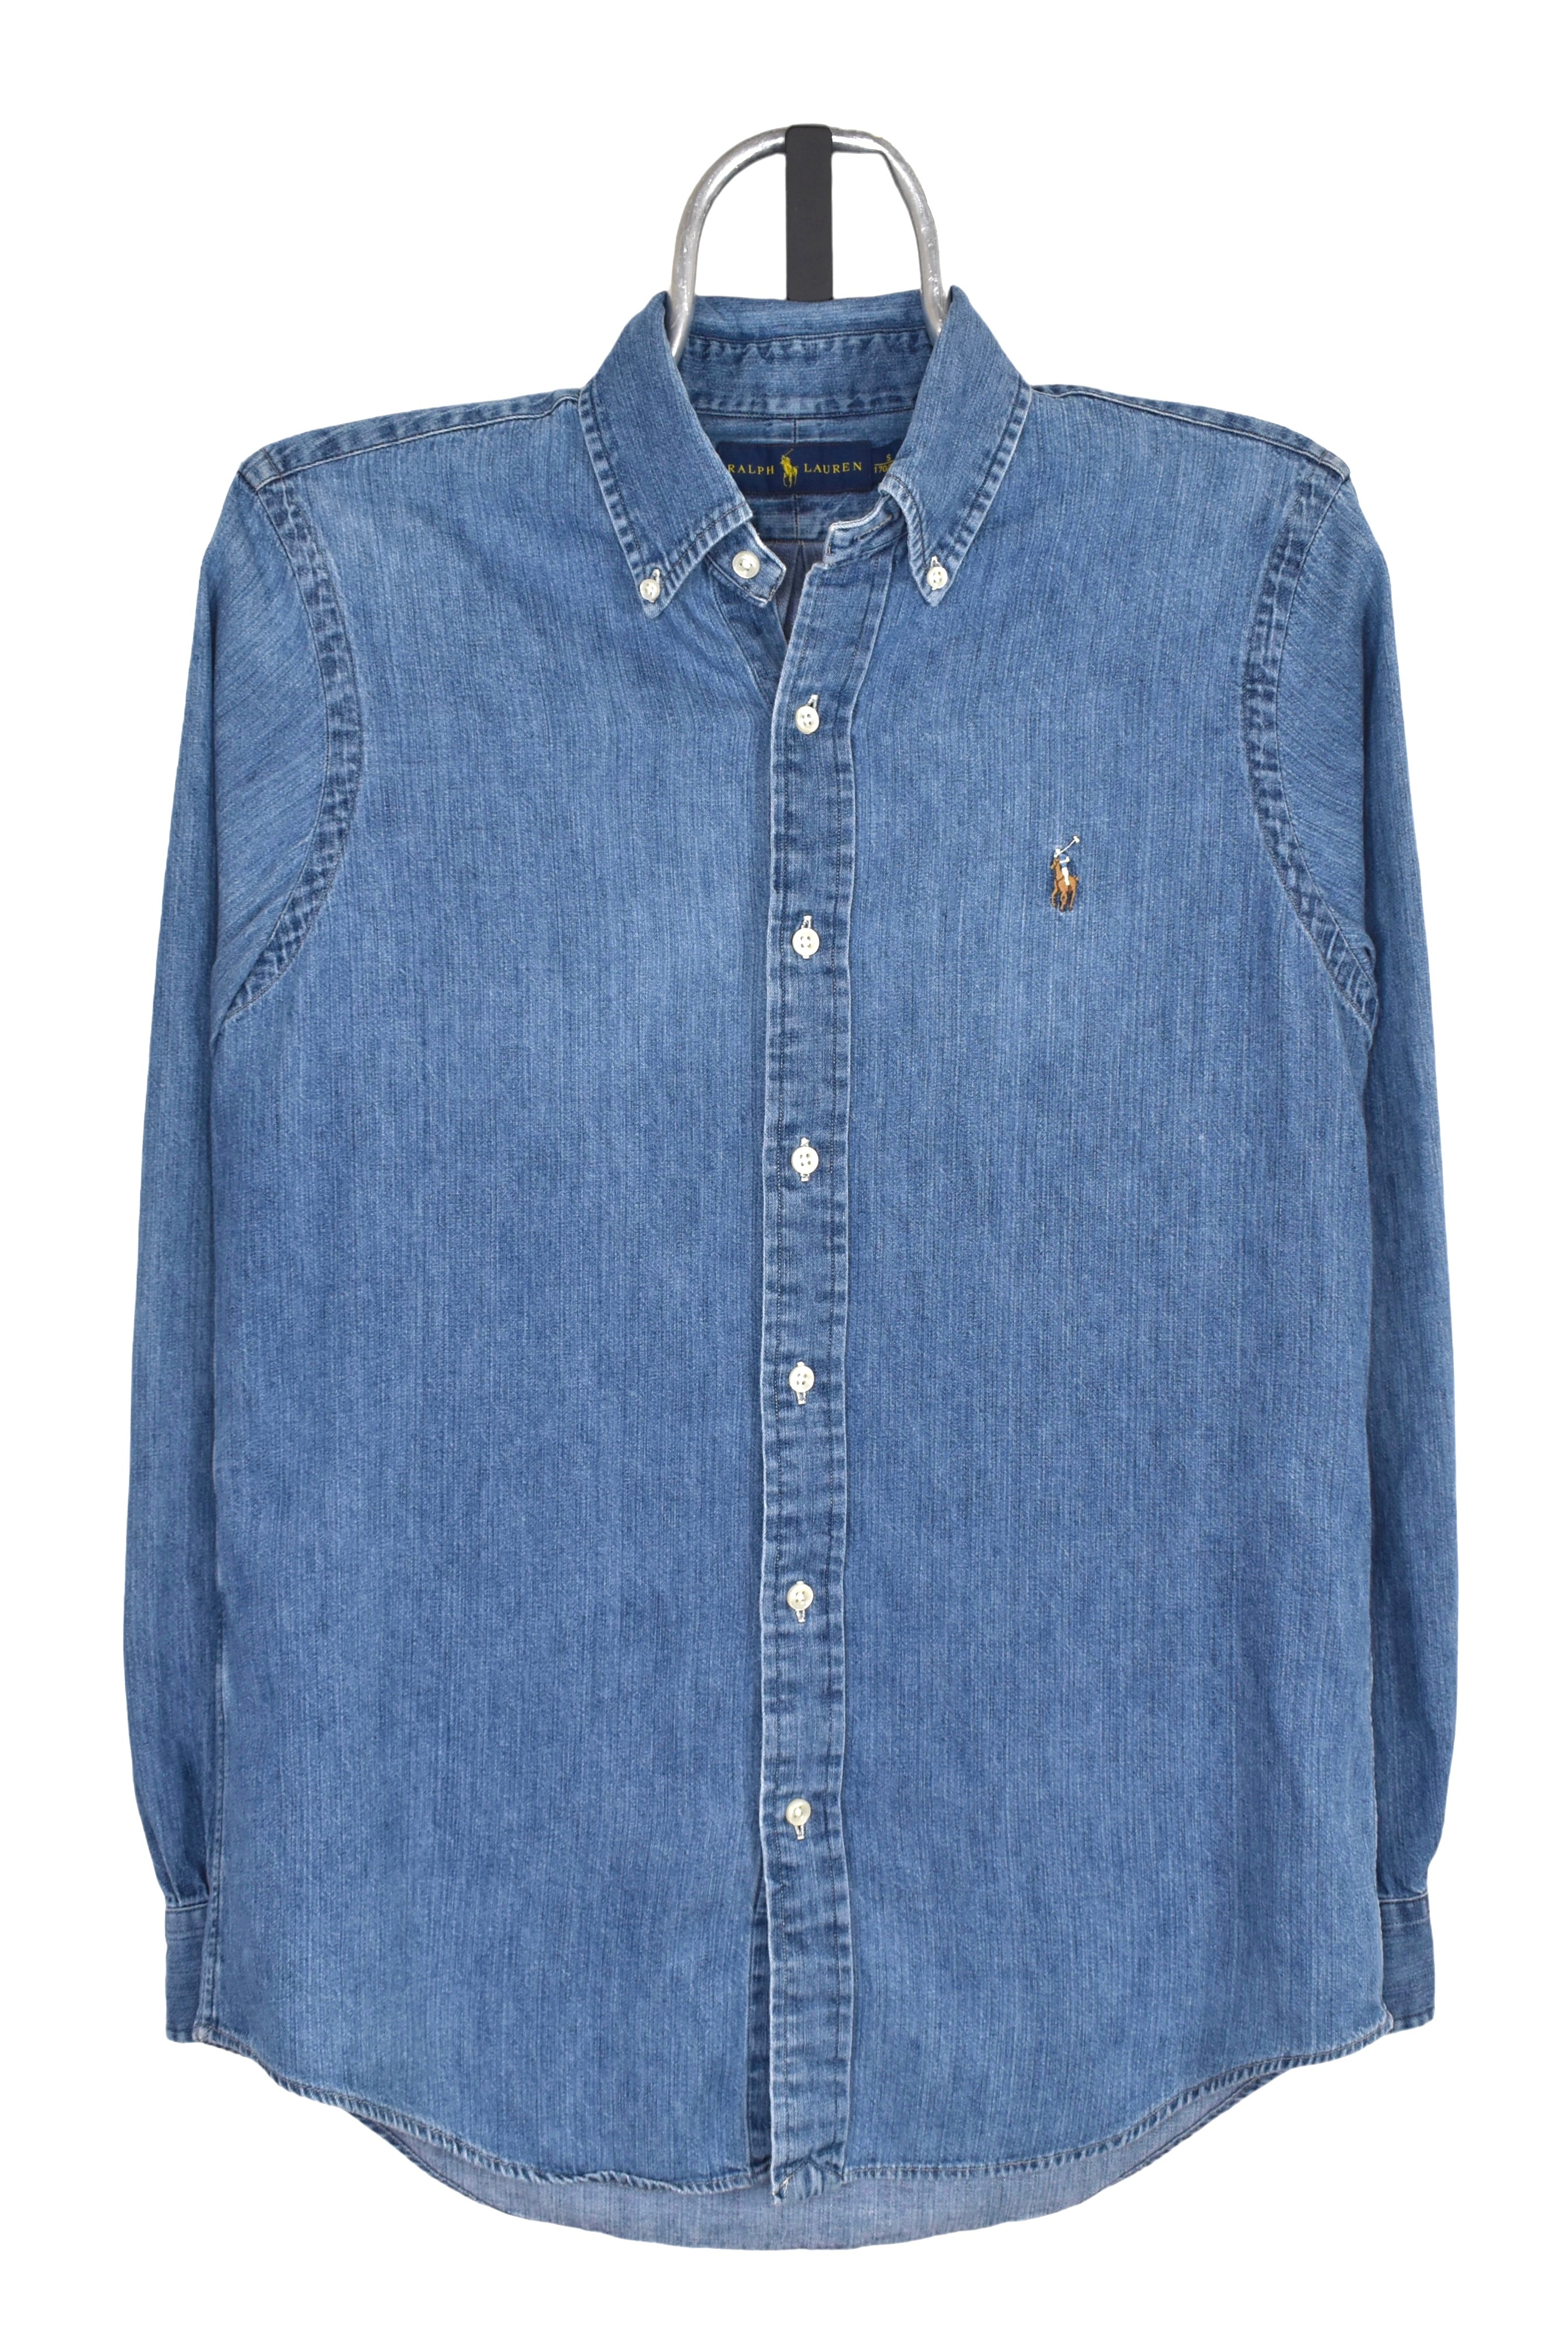 Polo by Ralph Lauren, Shirts, Polo Ralph Lauren 3xb Long Sleeve Button  Down Shirt Crest Number Big Pony Blue